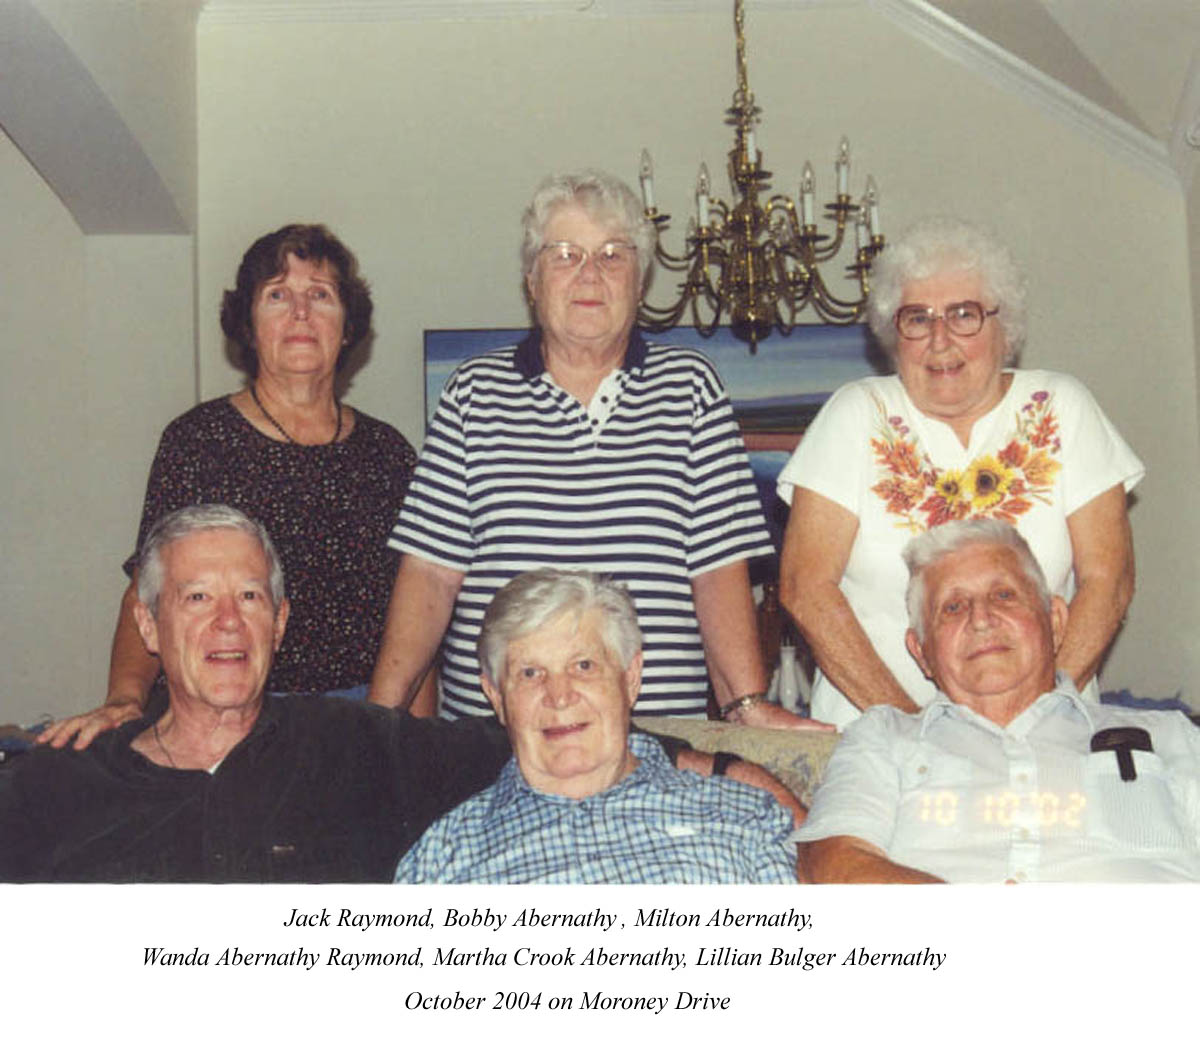 Jack Raymond, Bobby, Milton Abernathy, Wanda Abernathy Raymond, Martha Crook Abernathy, Lillian Bulger Abernathy  Oct. 2004